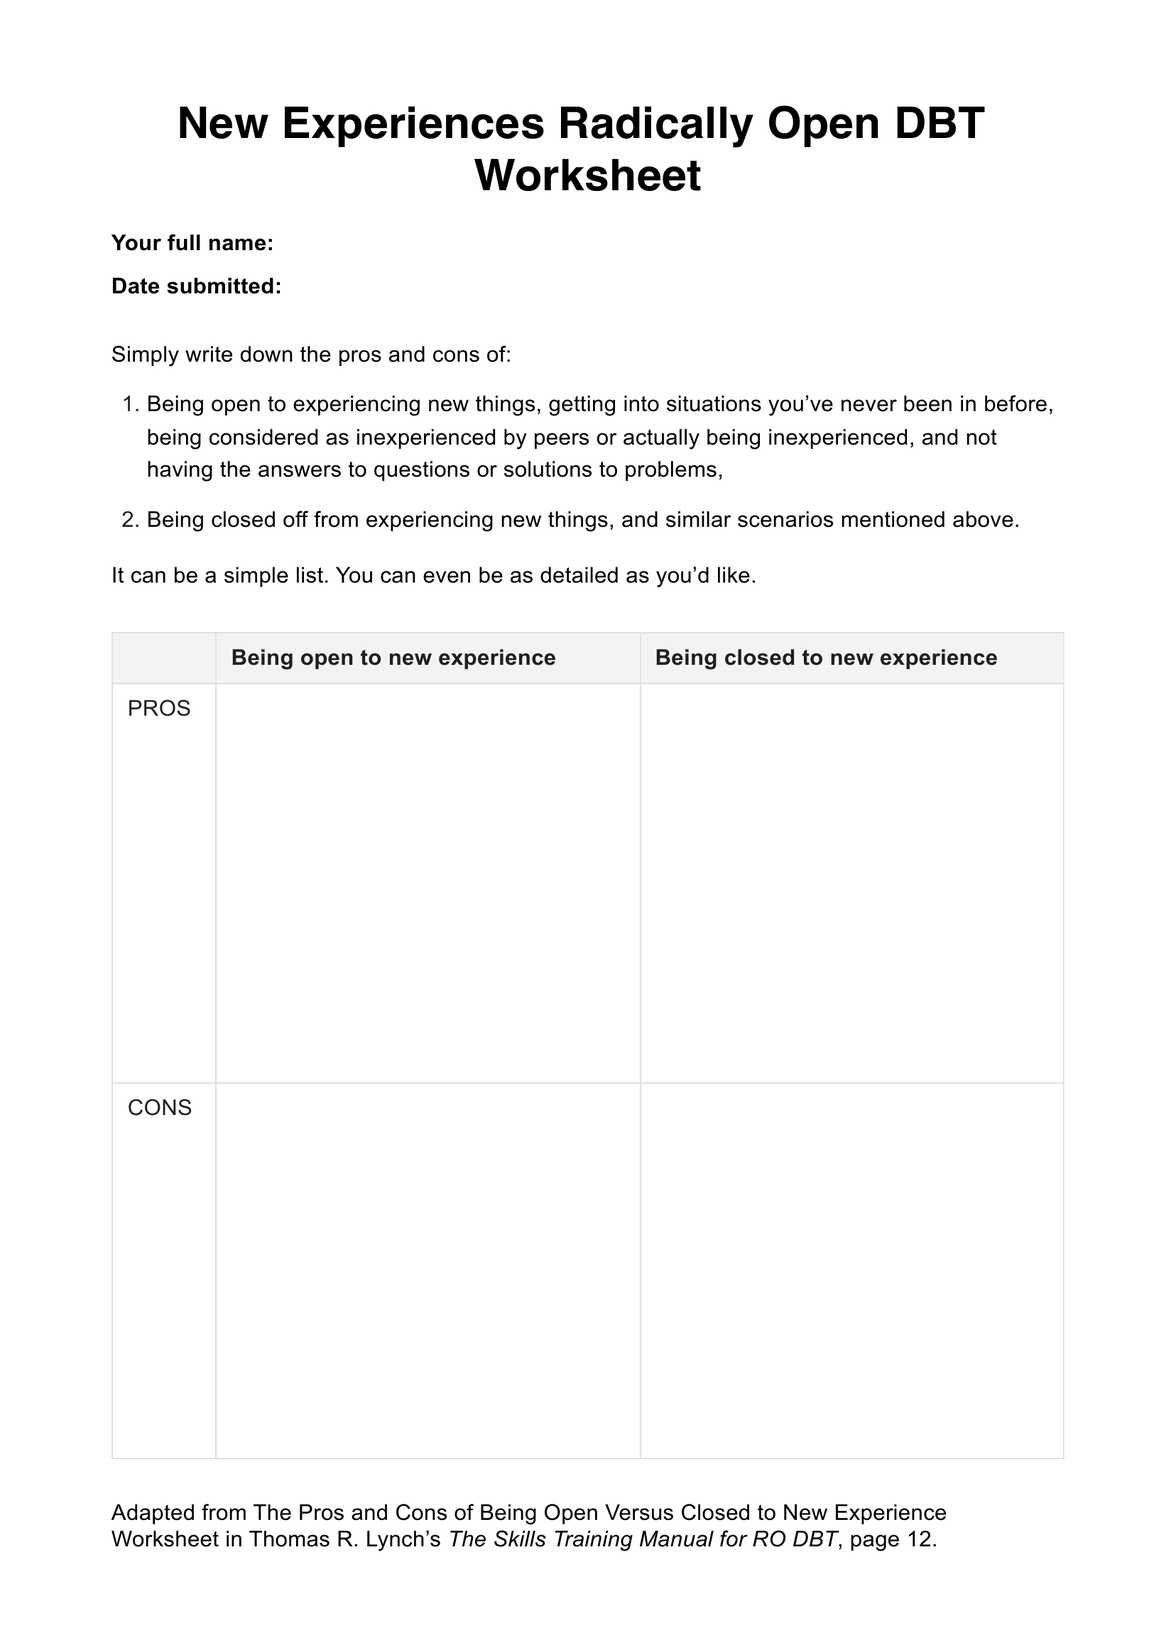 New Experiences Radically Open DBT Worksheet PDF Example